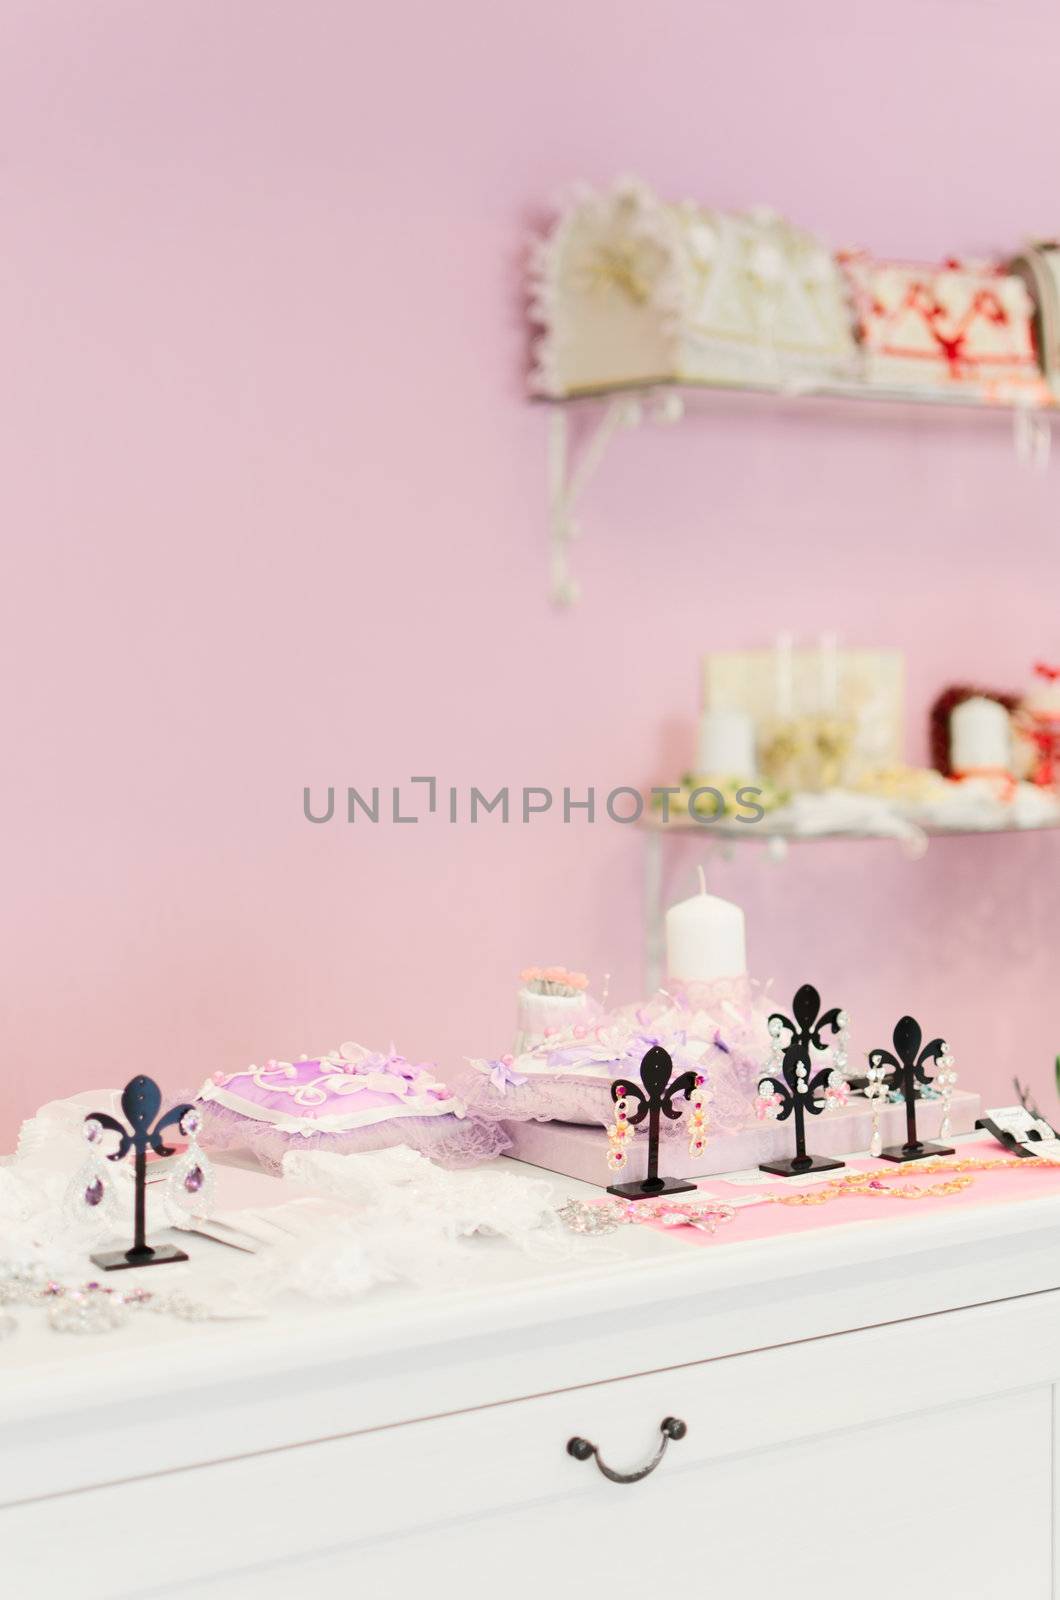 Wedding store background. Bridal bijouterie. Pink wall and different stuff on glass shelfs